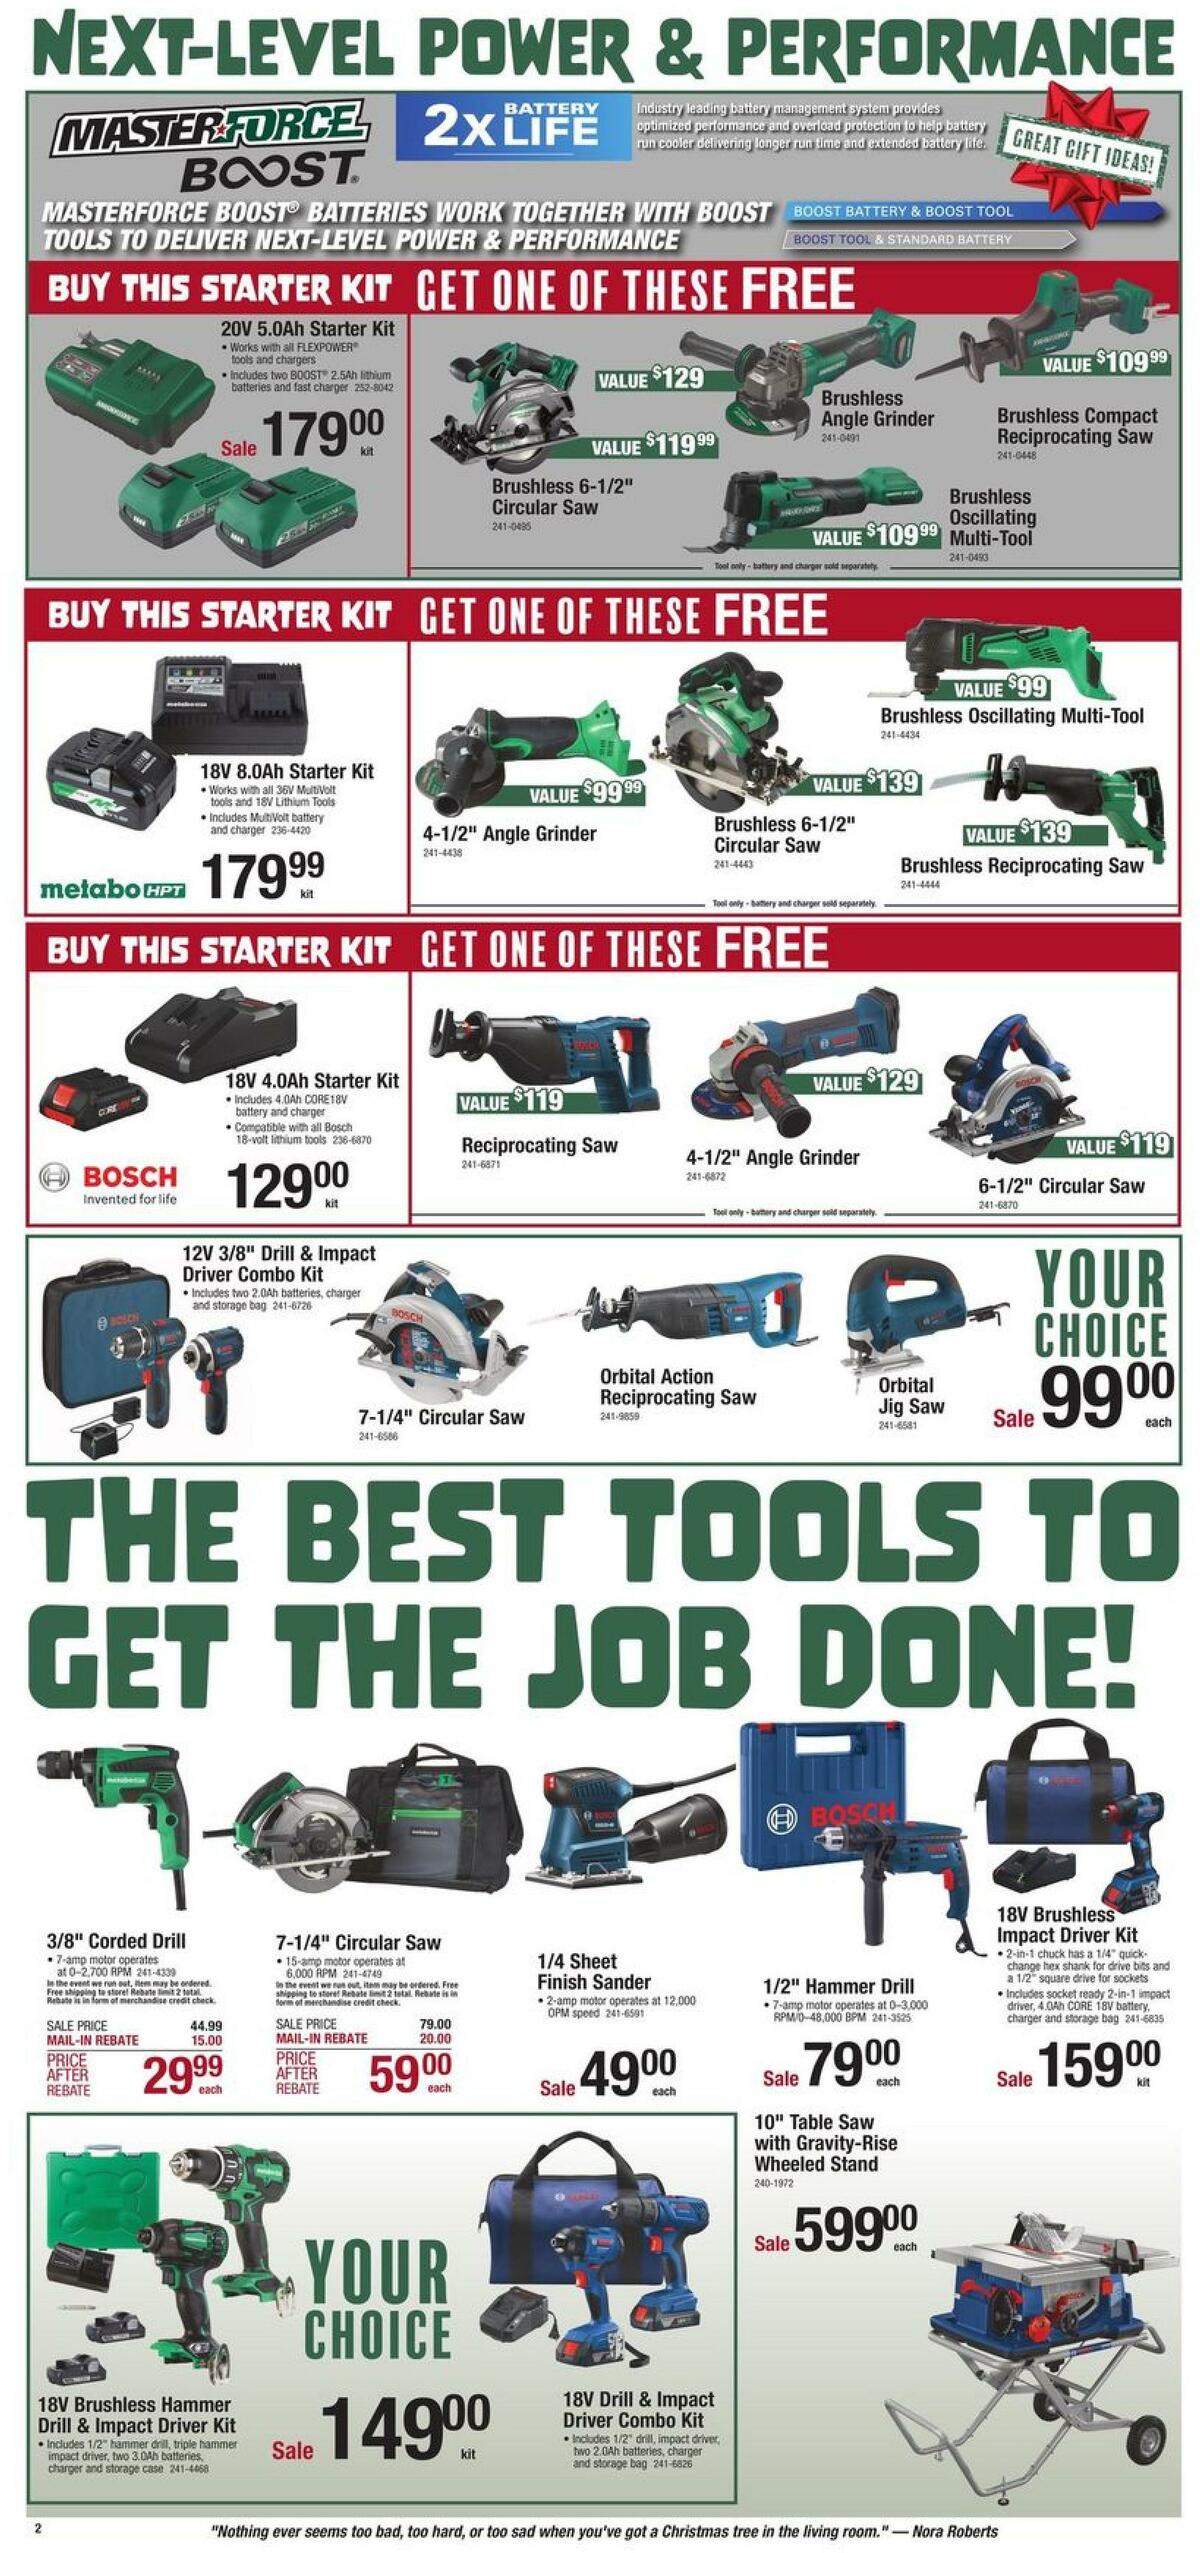 Menards Christmas Tool Sale Weekly Ad from December 10